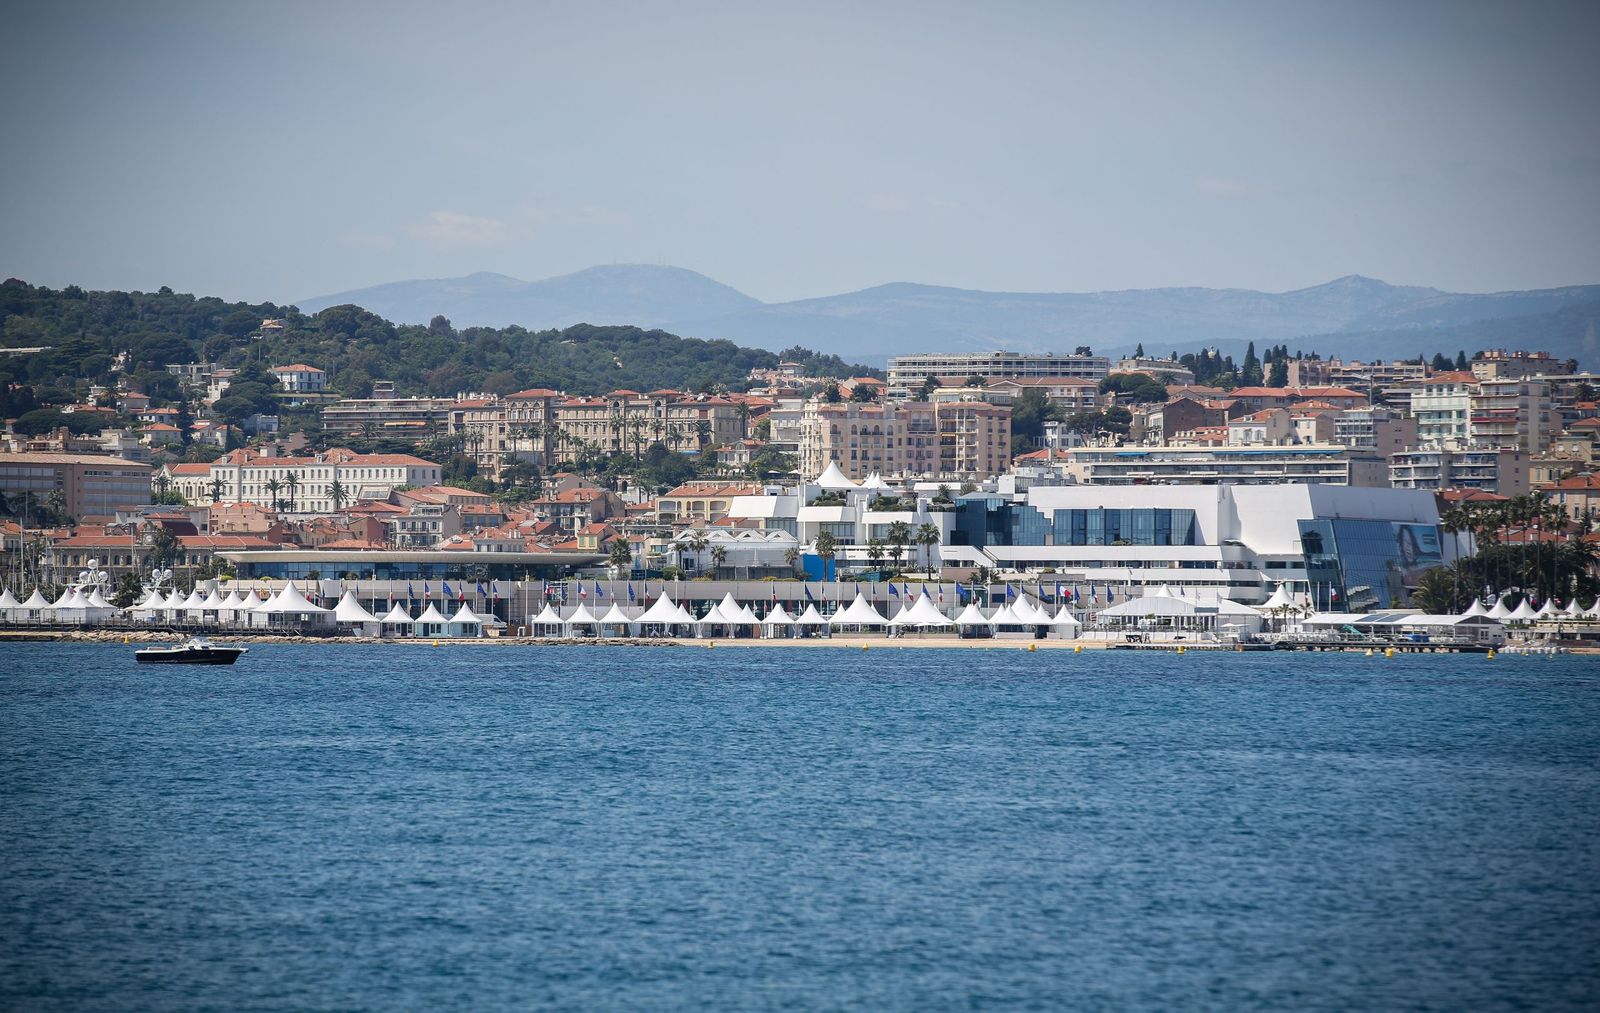 The Festival and its venues - Festival de Cannes